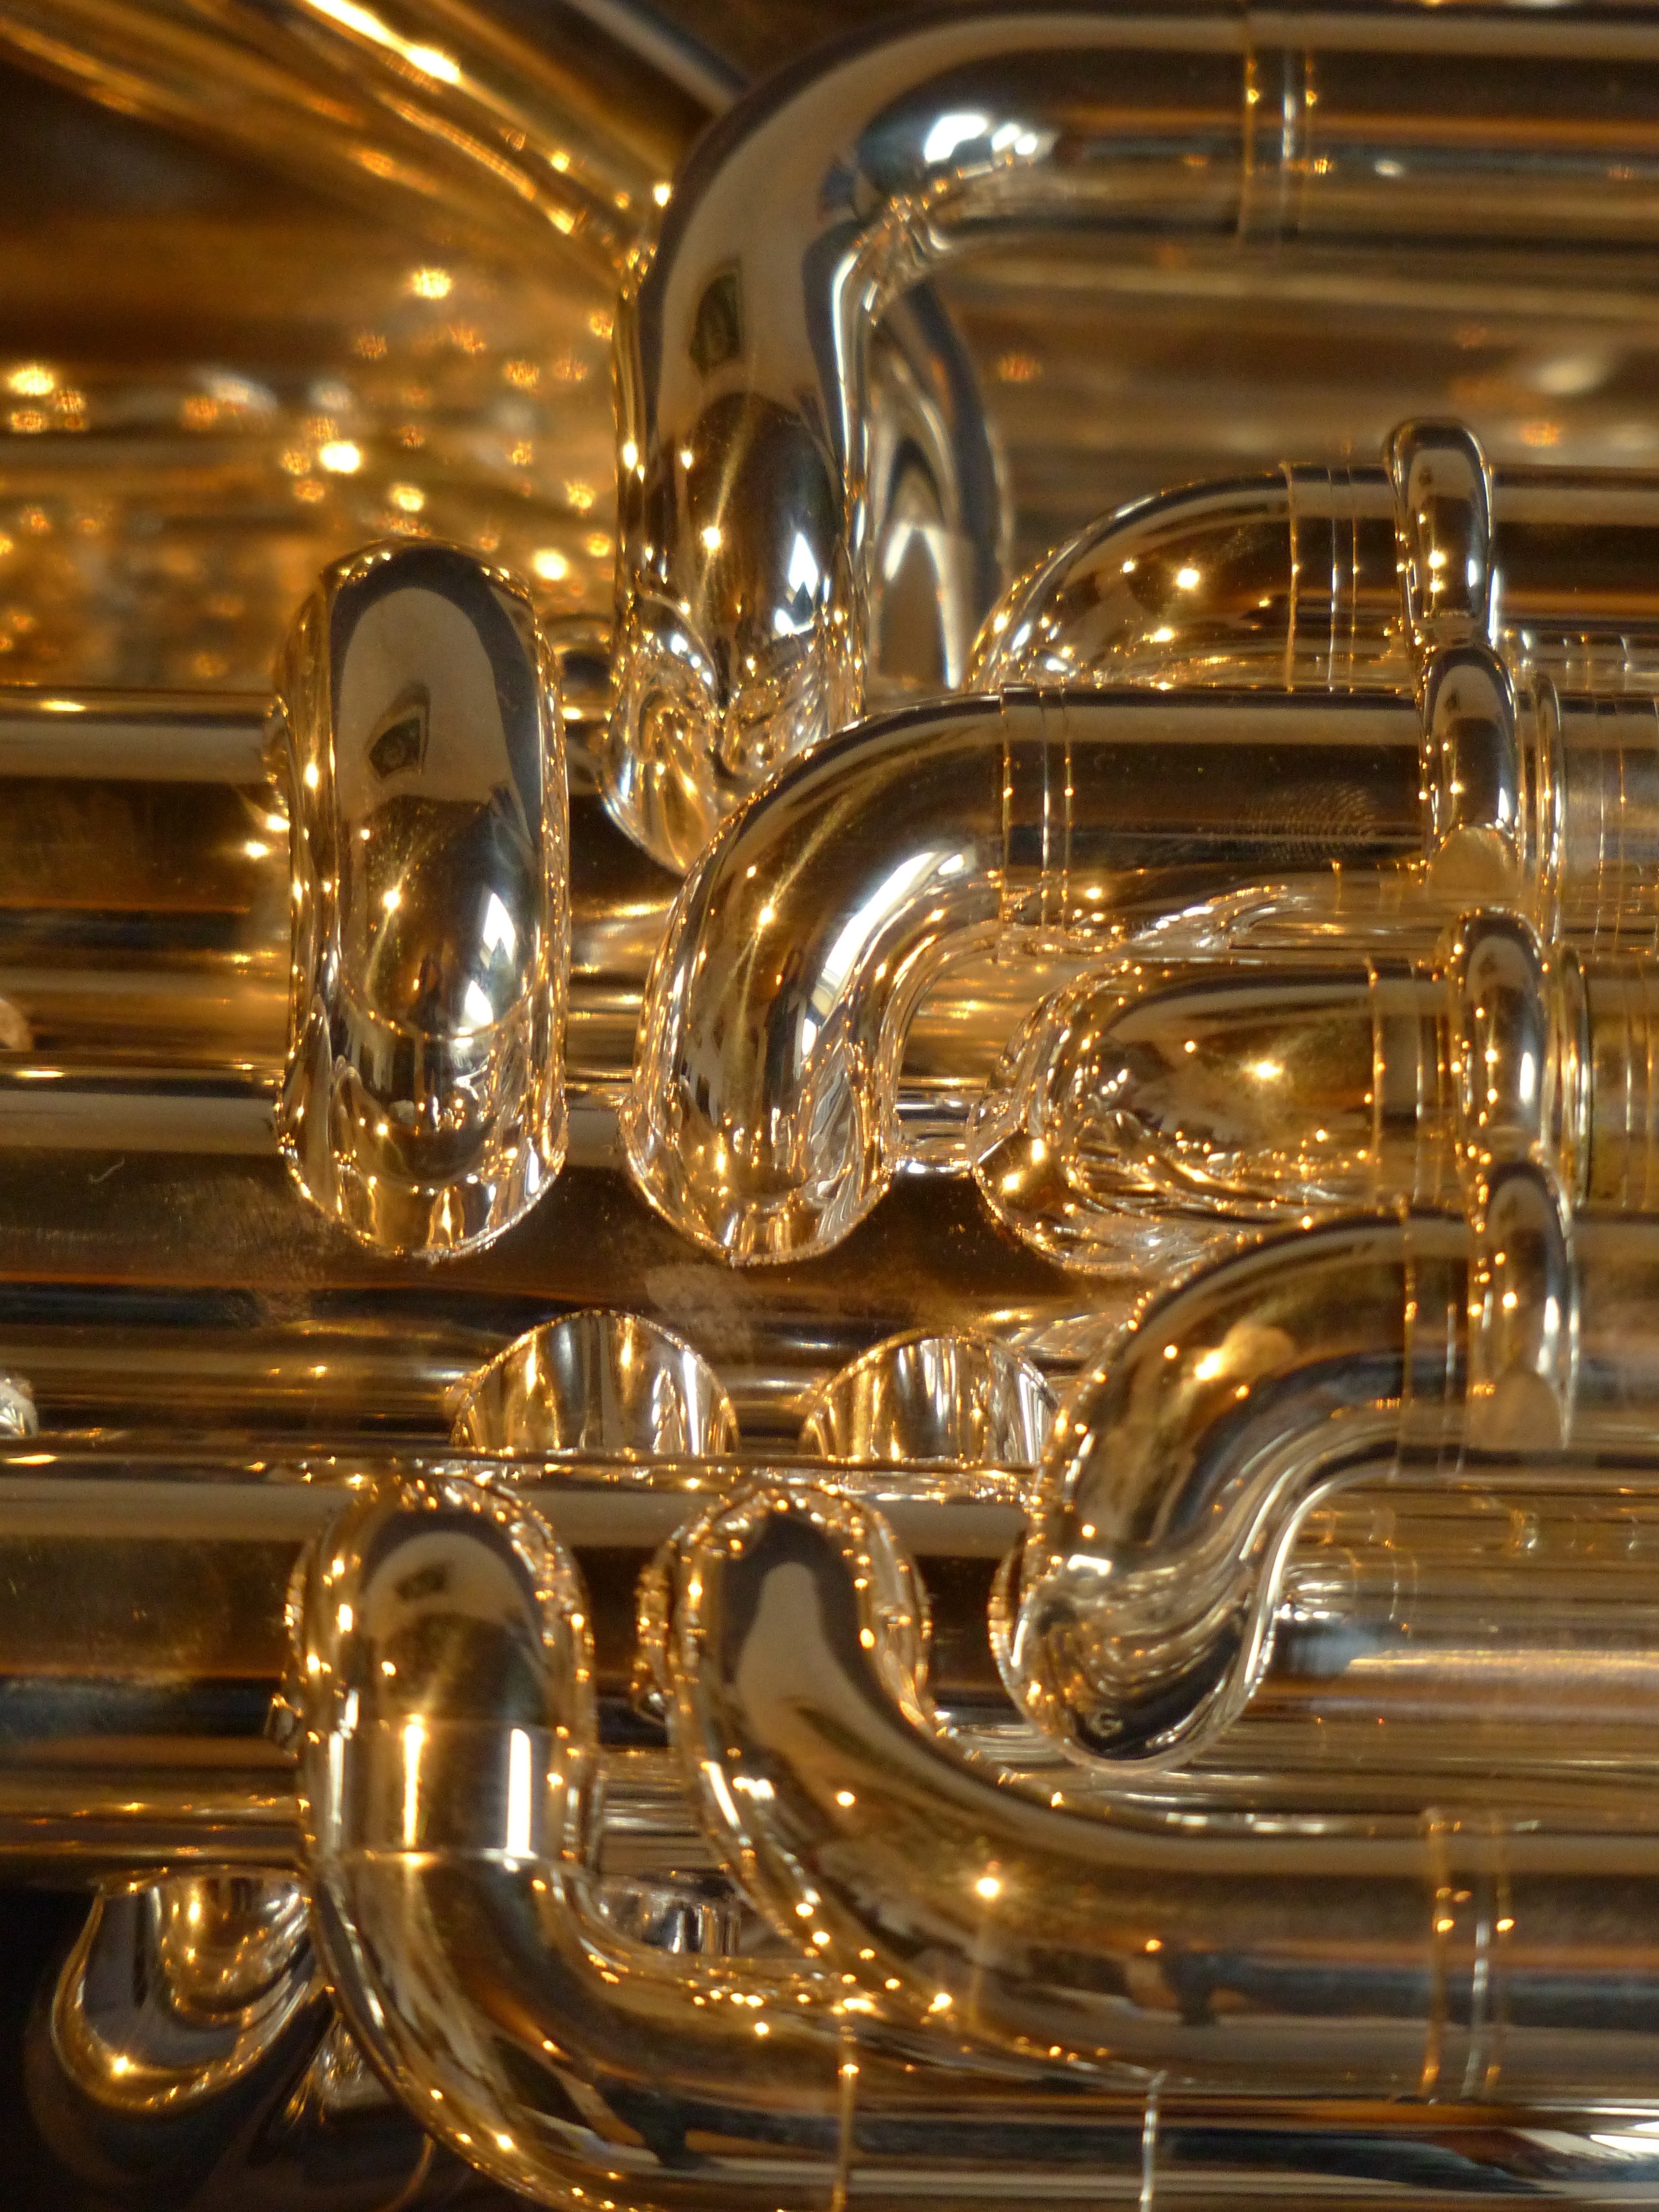 Brass Instrument, Euphonium, Instrument, gold colored, musical instrument